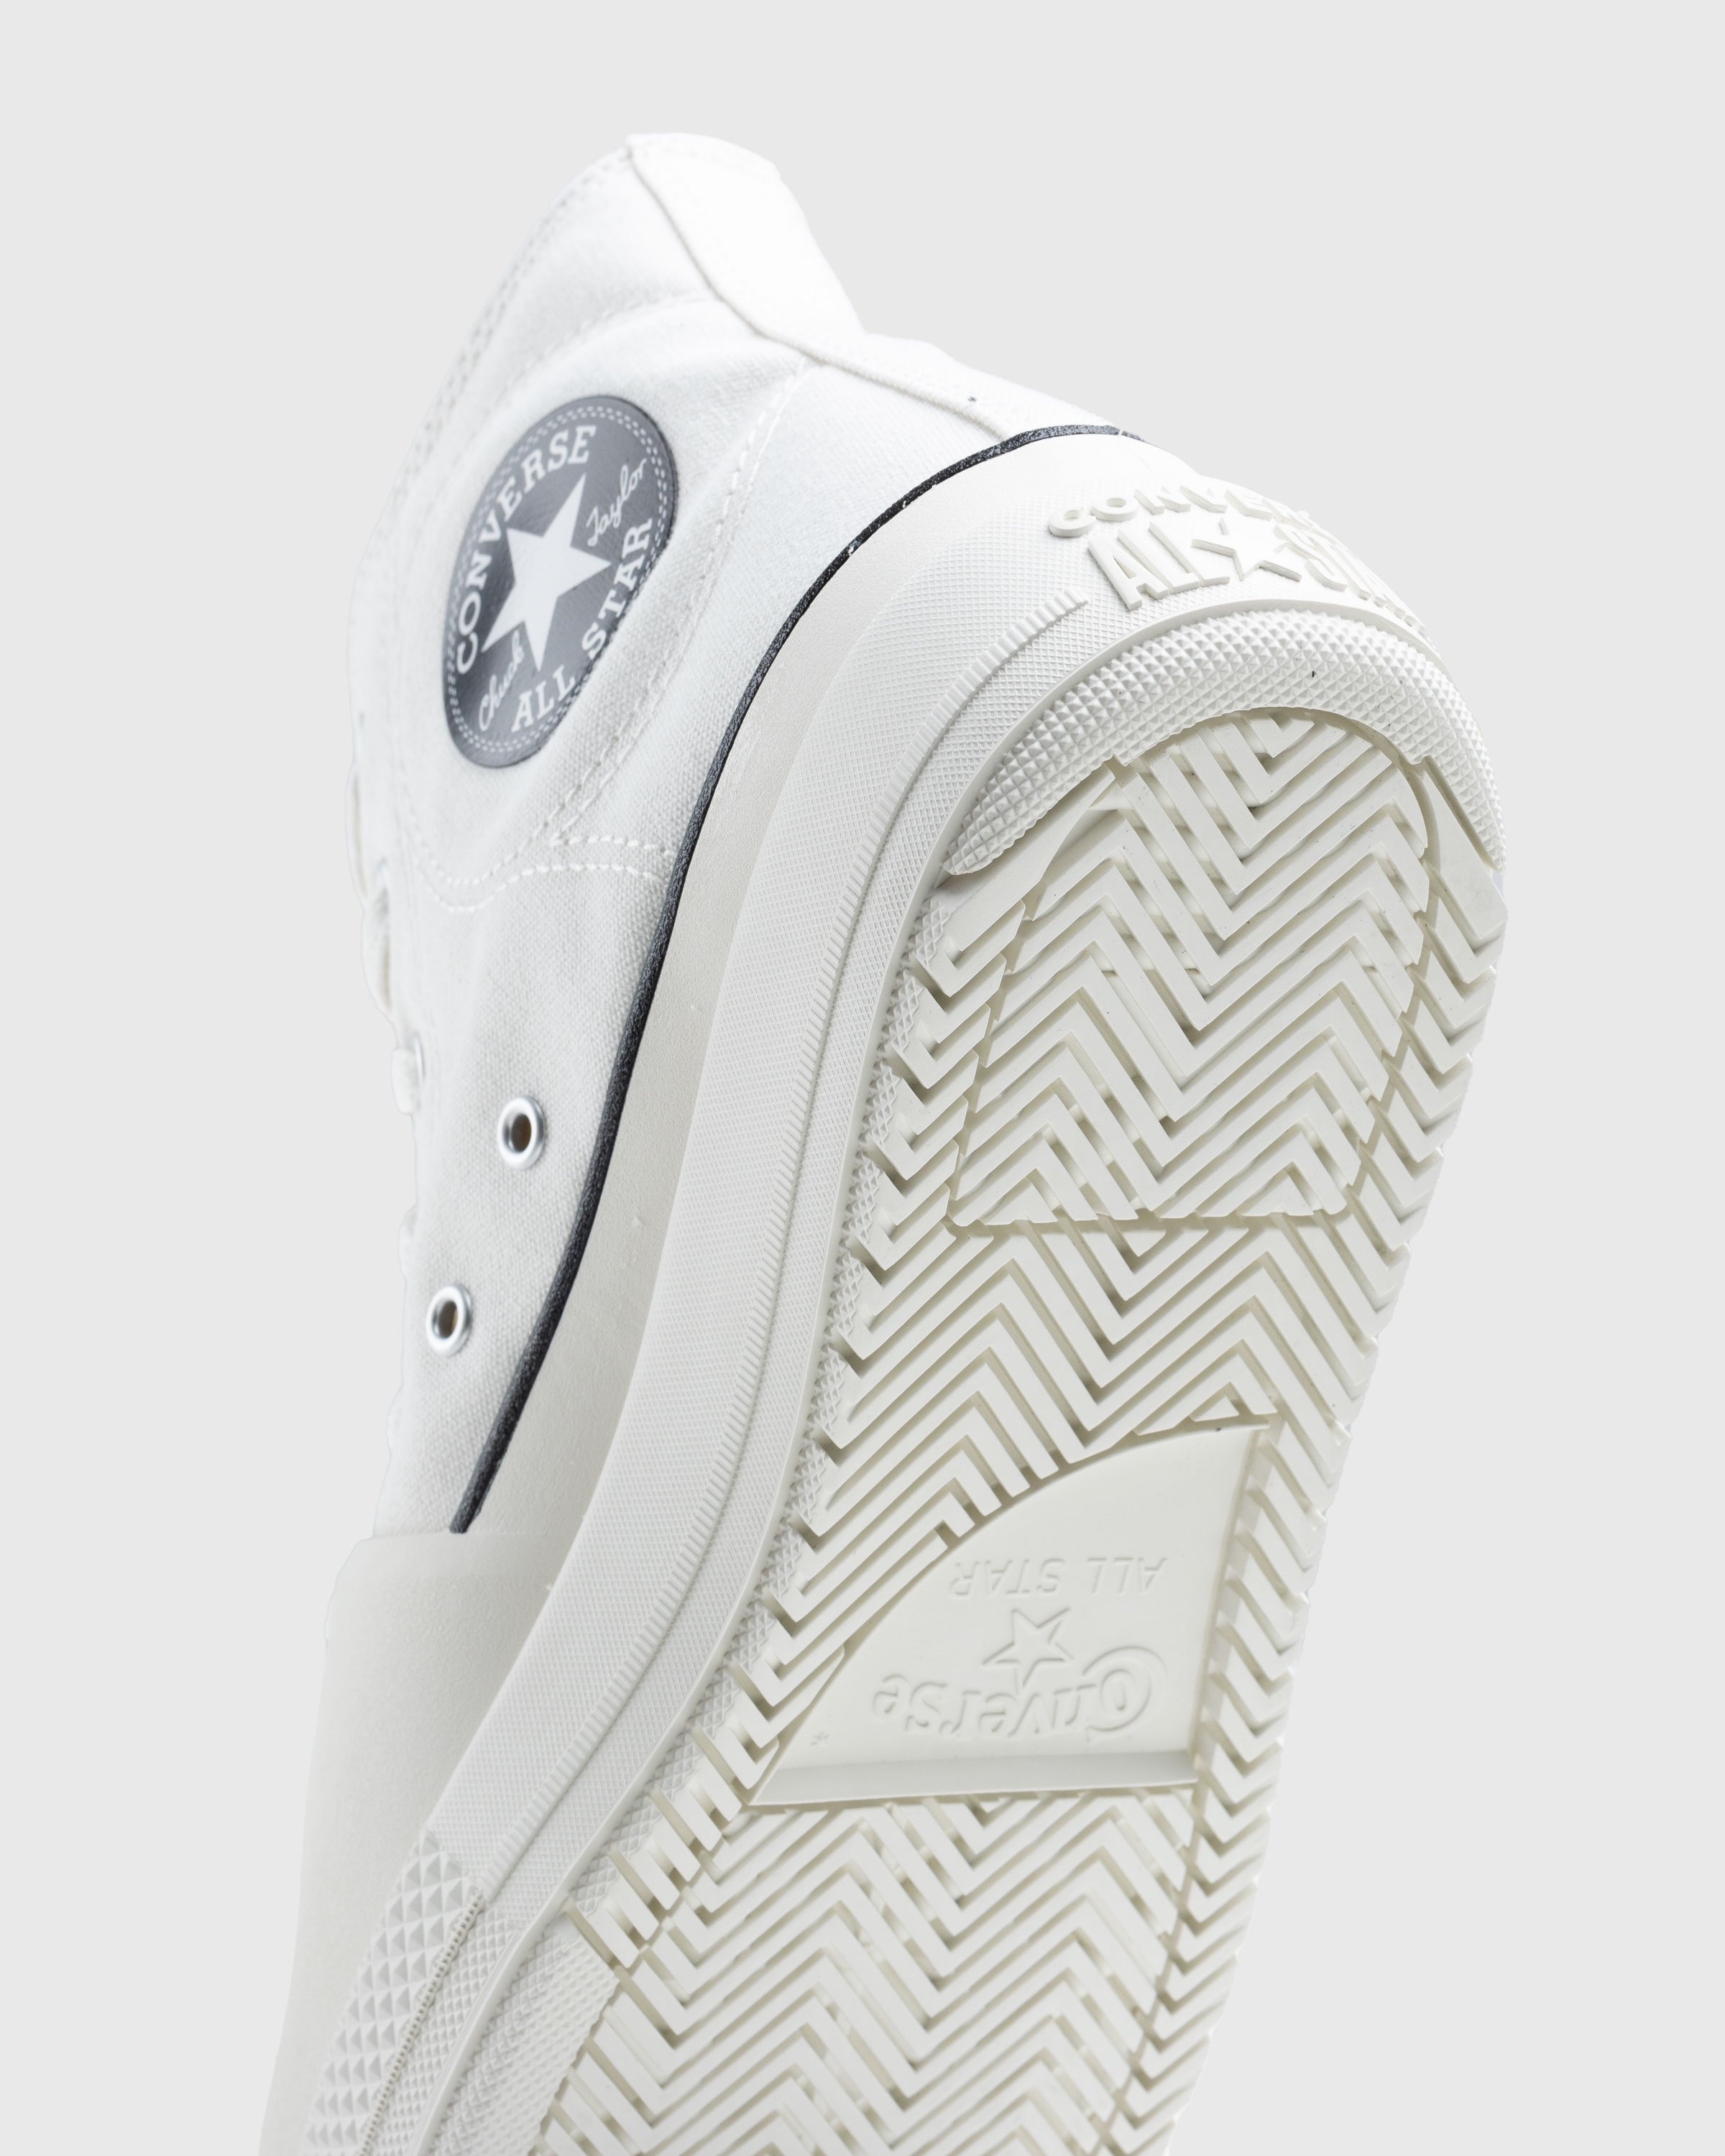 Converse - Chuck Taylor All Star Construct Hi Vintage White/Black/Egret - Footwear - Beige - Image 6